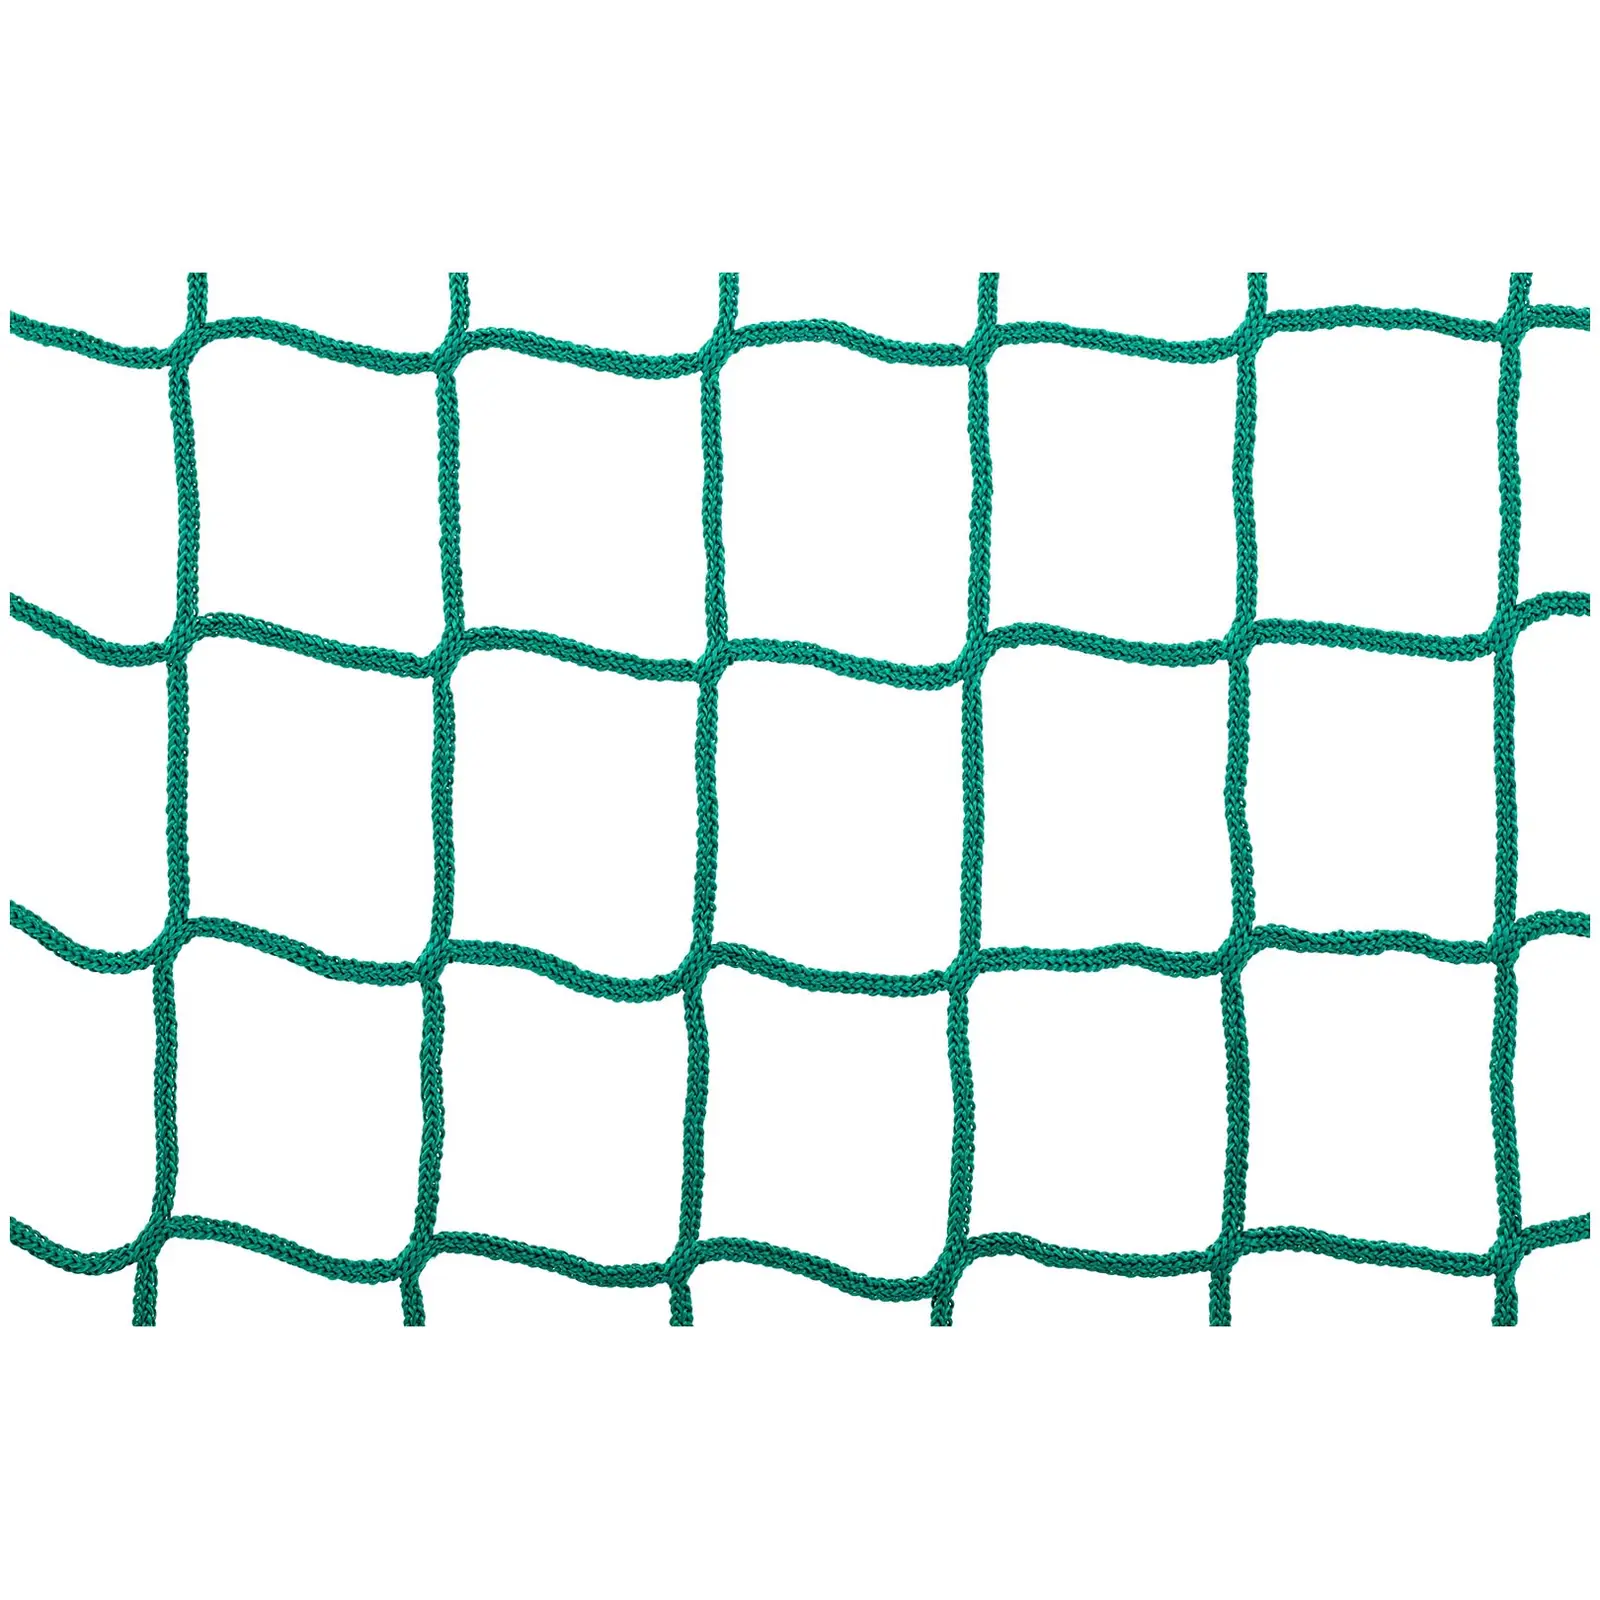 Trailer Net - 2 x 10 m - 10 x 10 cm mesh